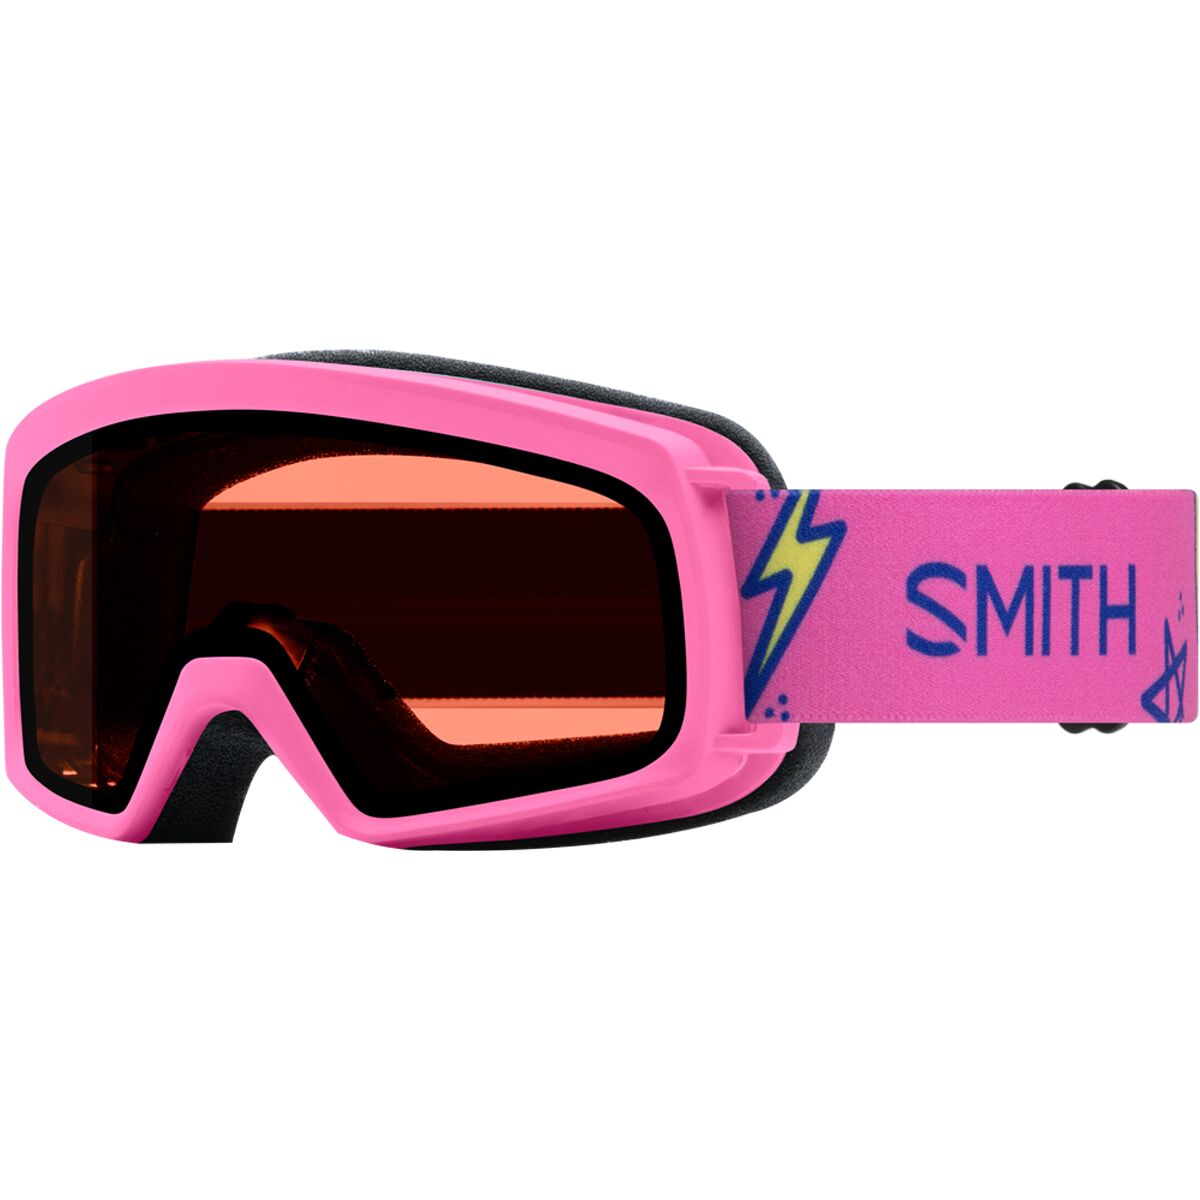 Smith Rascal Goggles - Kids' Flamingo Stickers